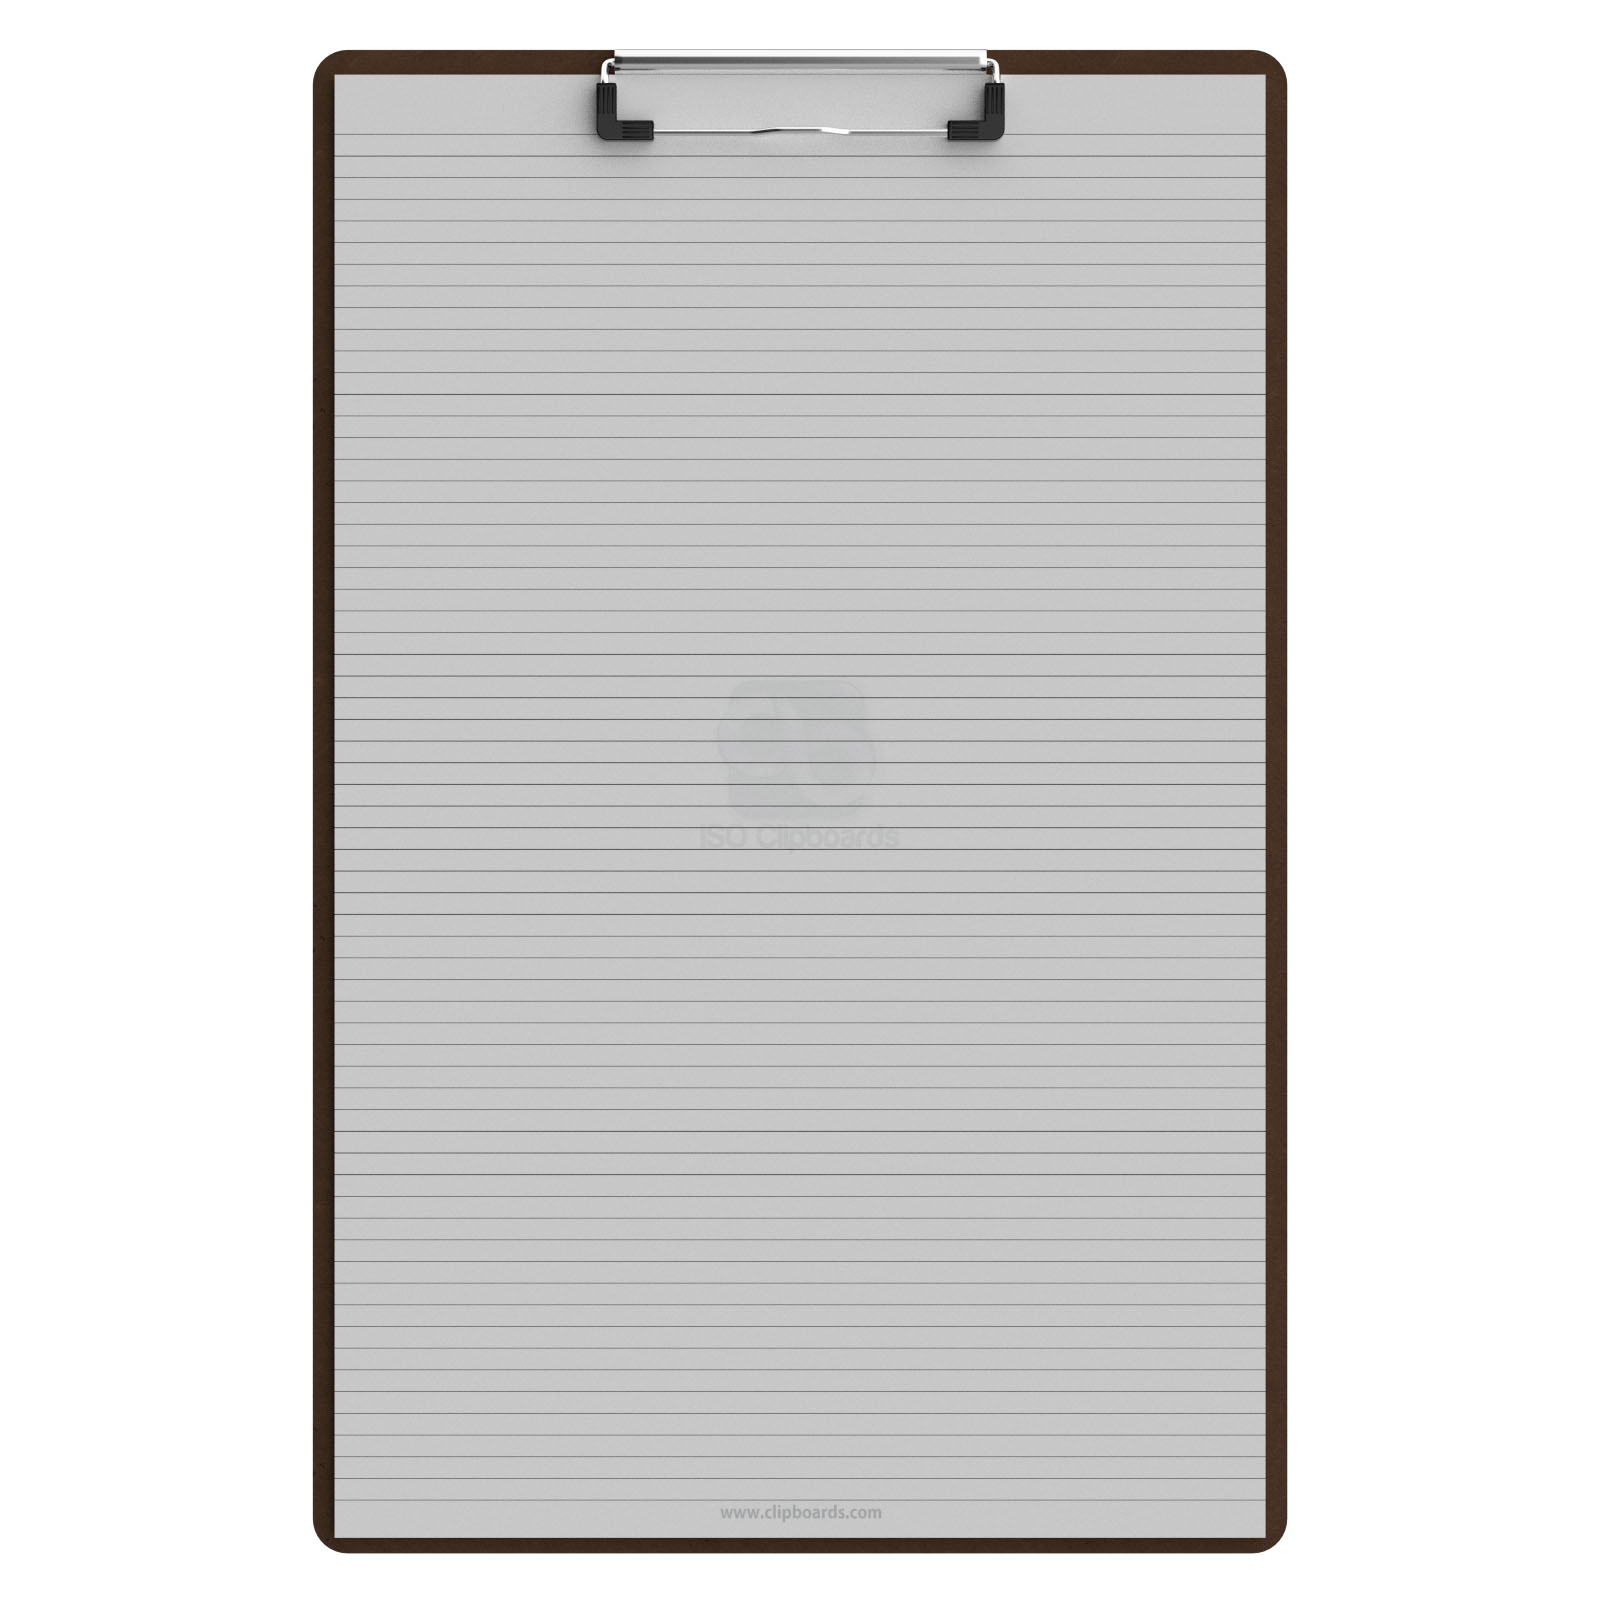 VLB Duraply Tabloid-size (11 x 17) Clipboard Portfolio